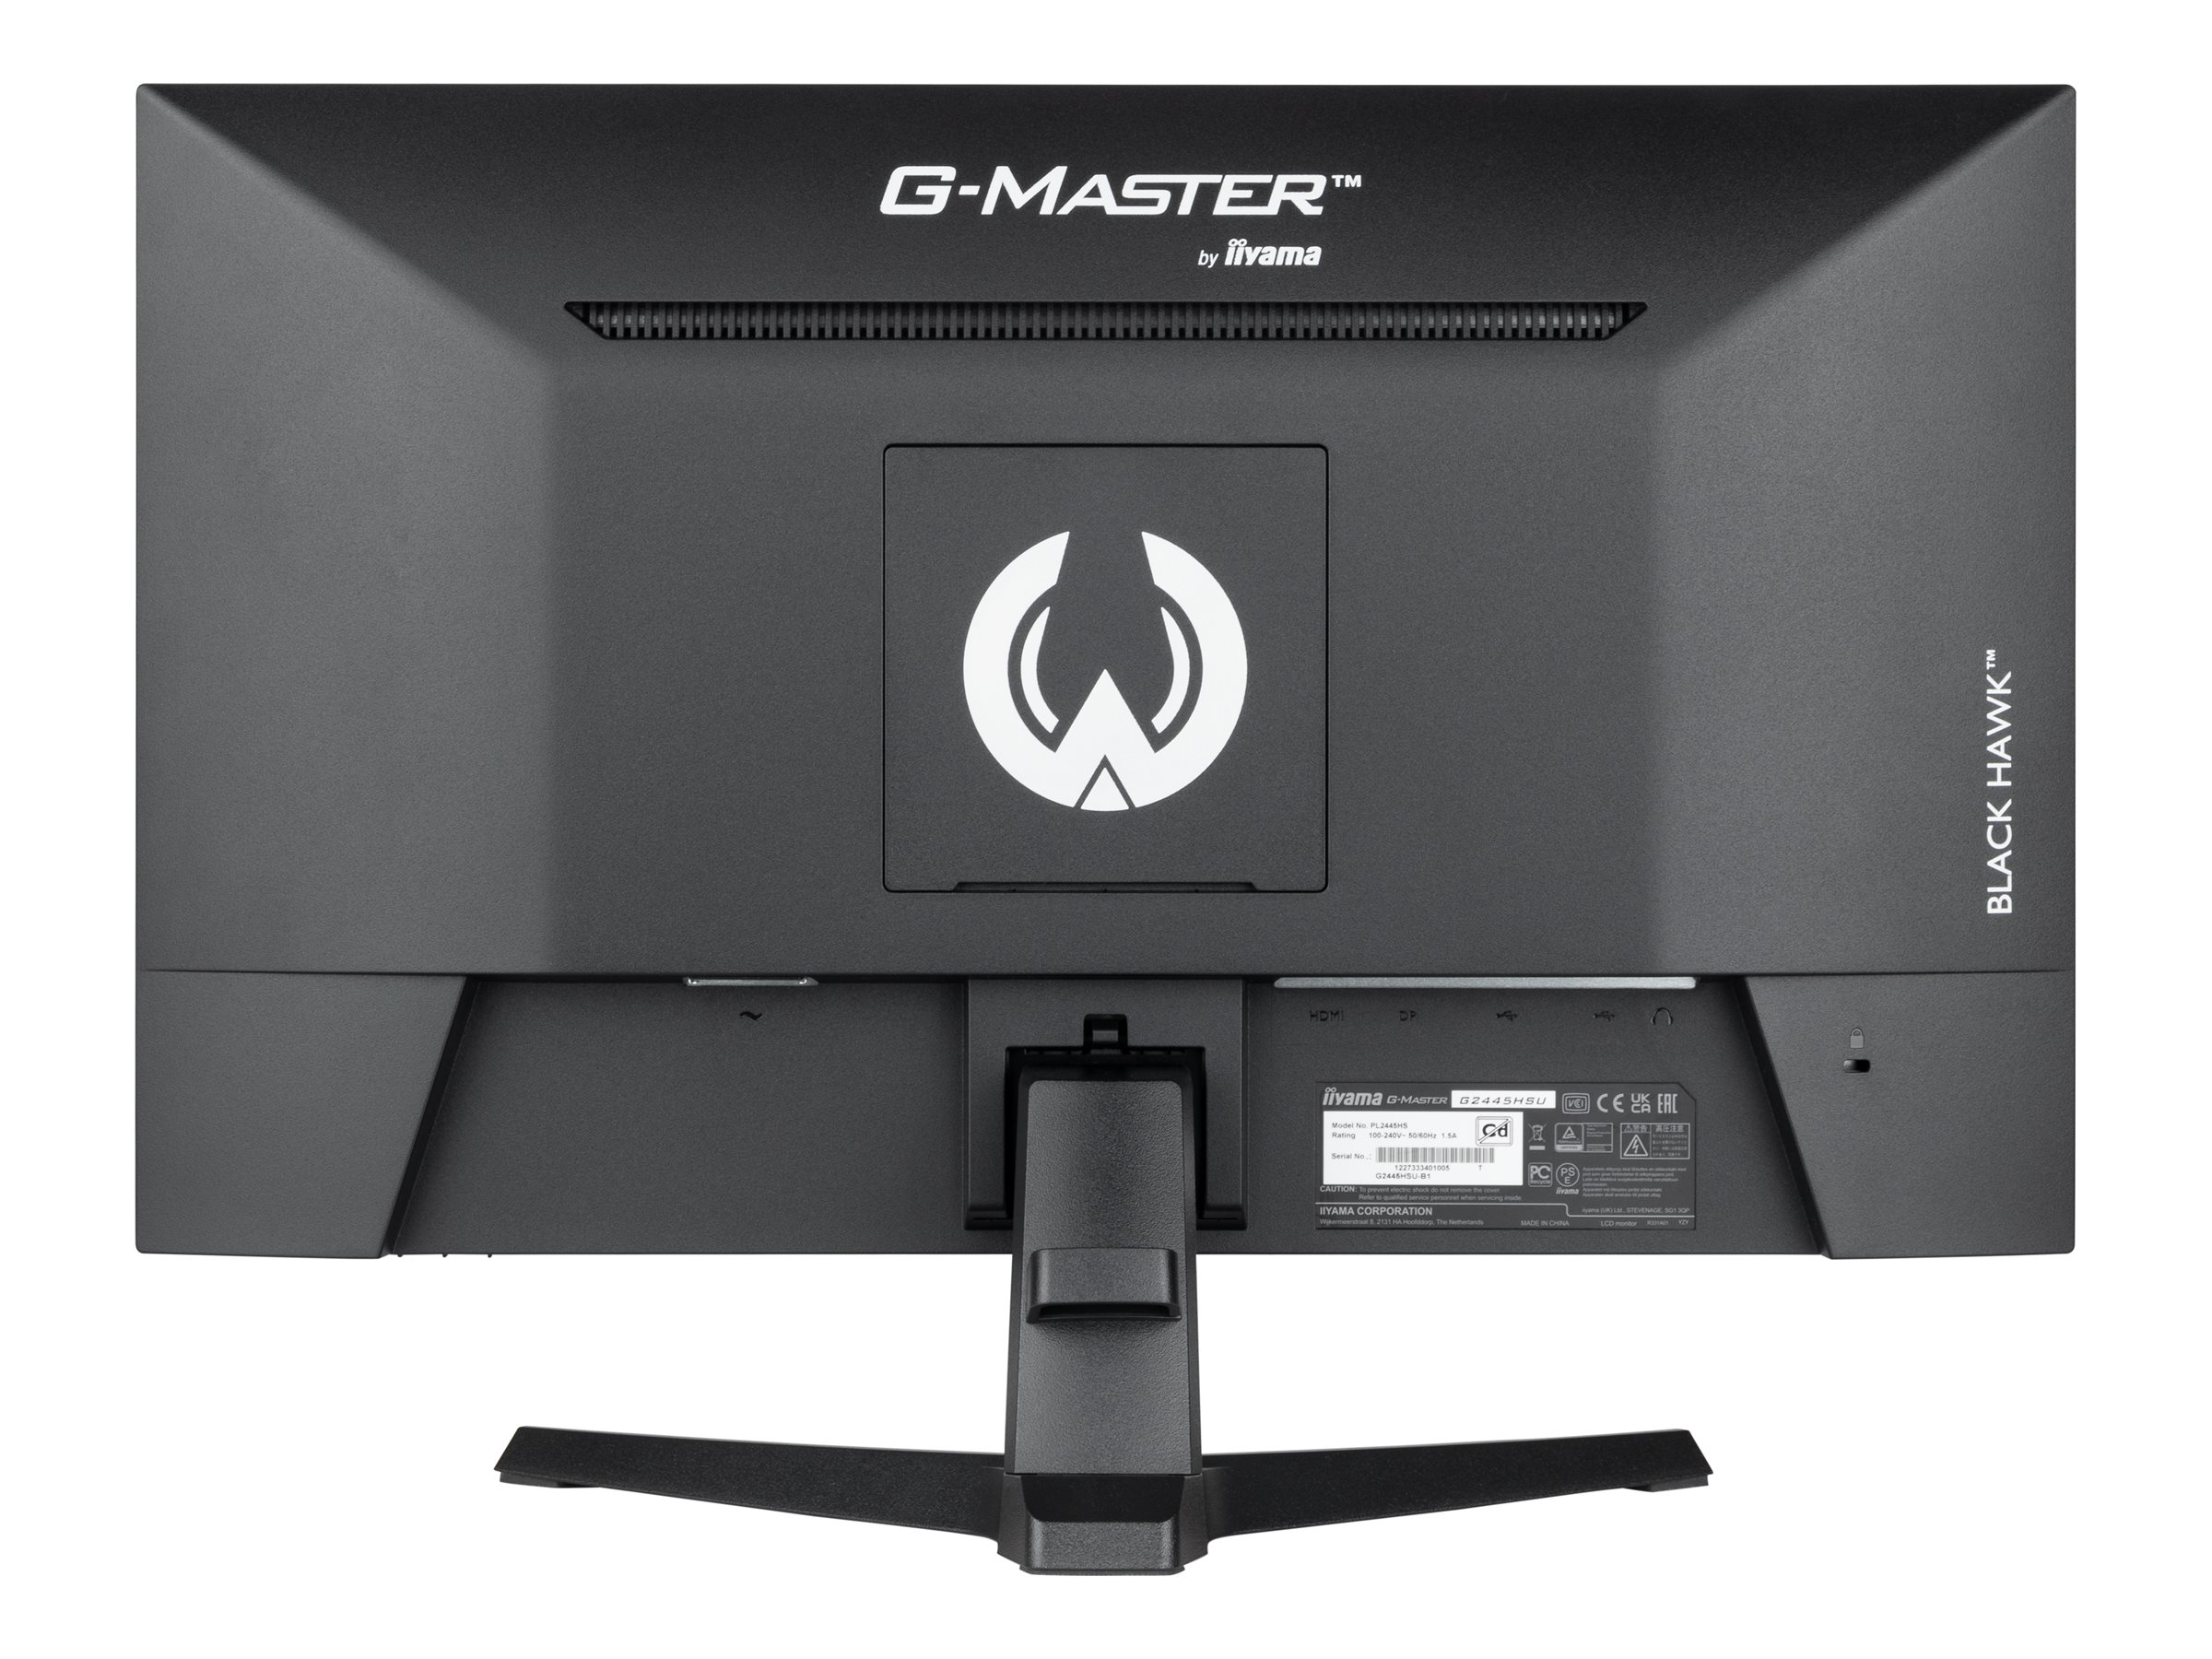 iiyama G-MASTER Black Hawk G2445HSU-B1 - Écran LED - 24" - 1920 x 1080 Full HD (1080p) @ 100 Hz - IPS - 250 cd/m² - 1300:1 - 1 ms - HDMI, DisplayPort - haut-parleurs - noir mat - G2445HSU-B1 - Écrans d'ordinateur